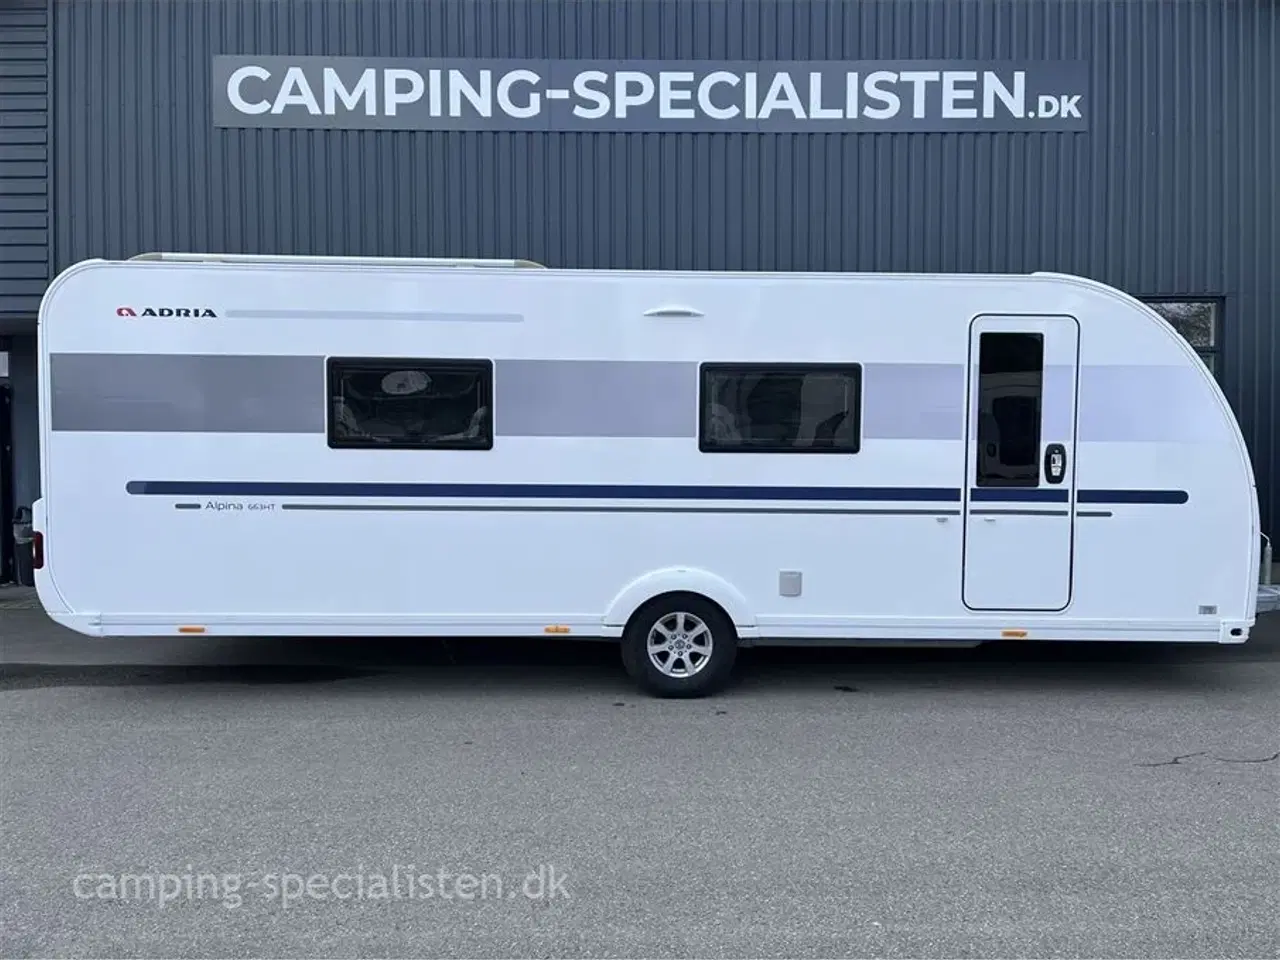 Billede 1 - 2019 - Adria Alpina 663 HT   Adria Alpina 663 HT model 2019 - Queensbed dobbeltseng - kan nu ses hos Camping-Specialisten.dk i Aarhus